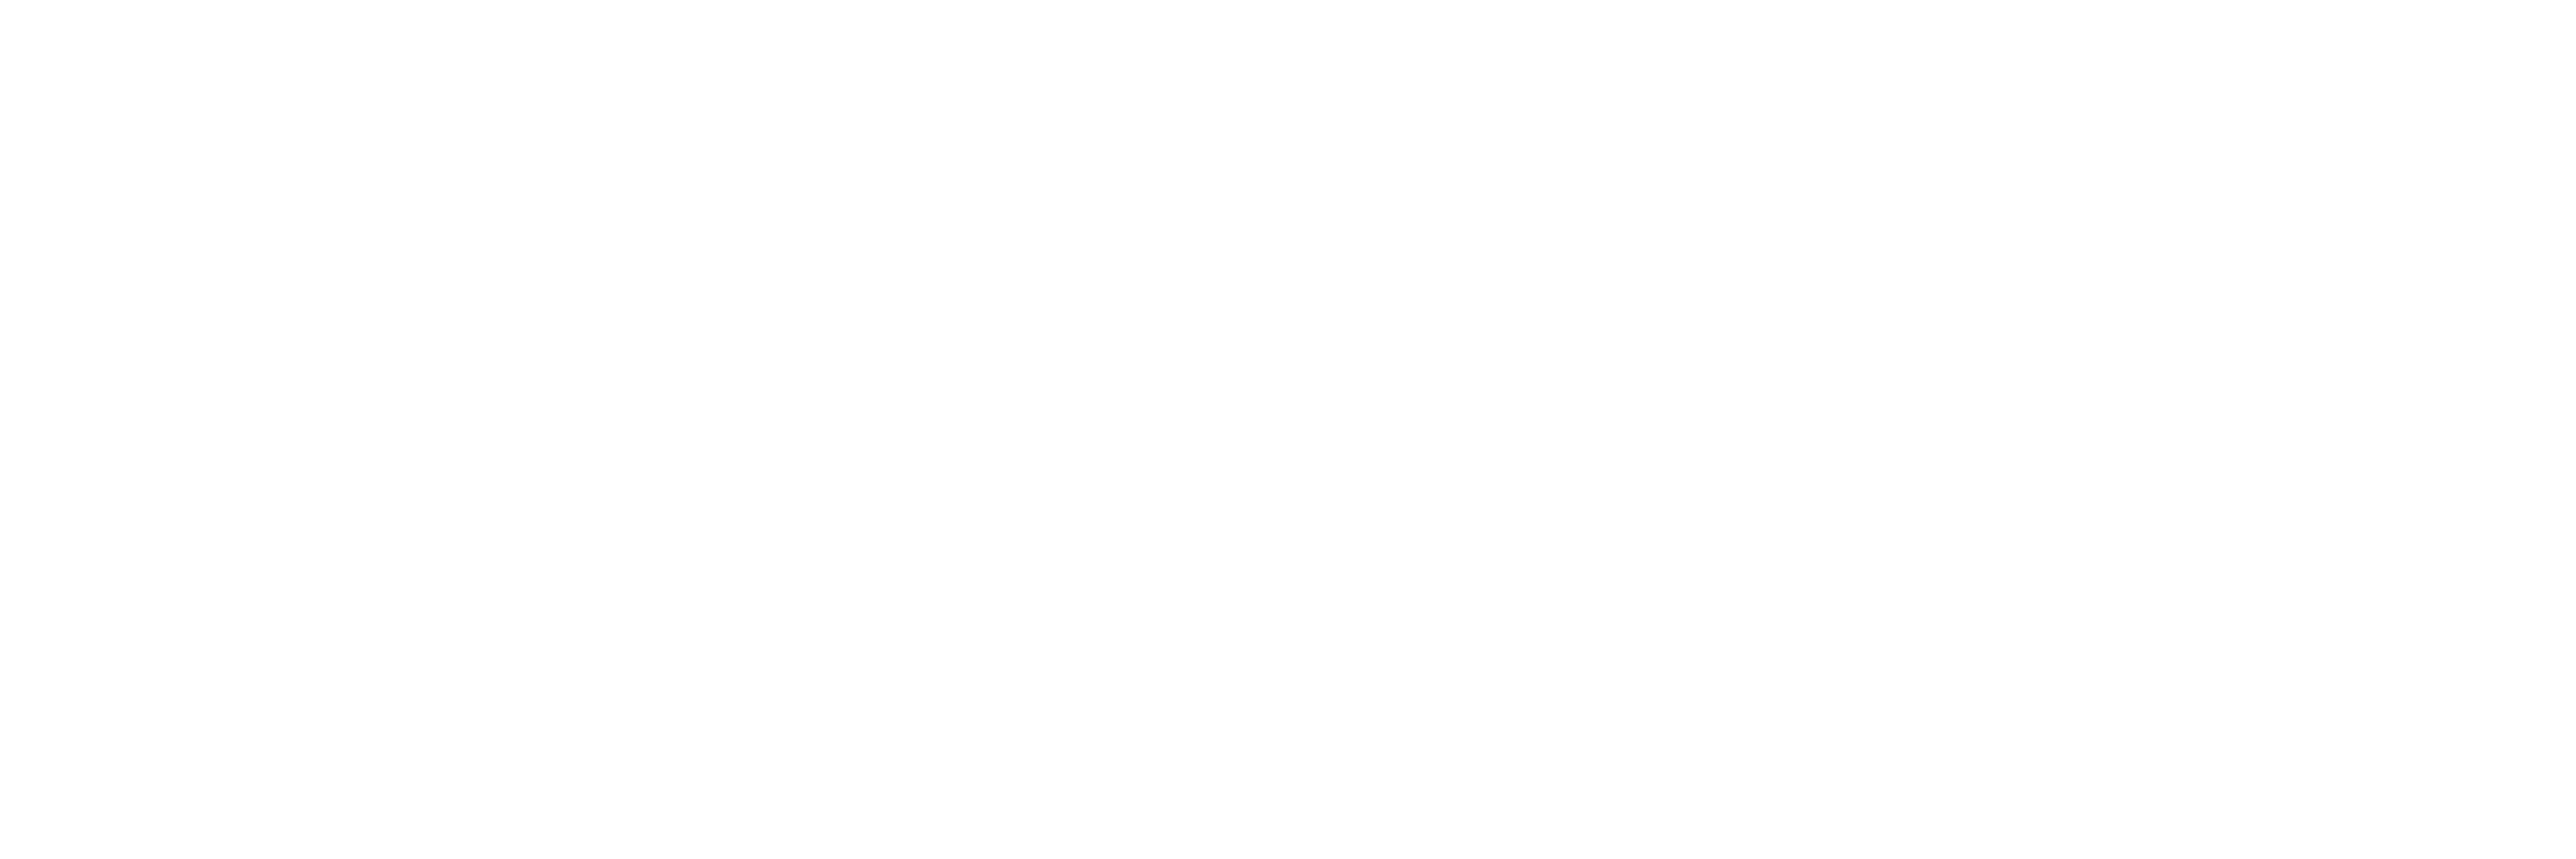 Shiftbase text logo white